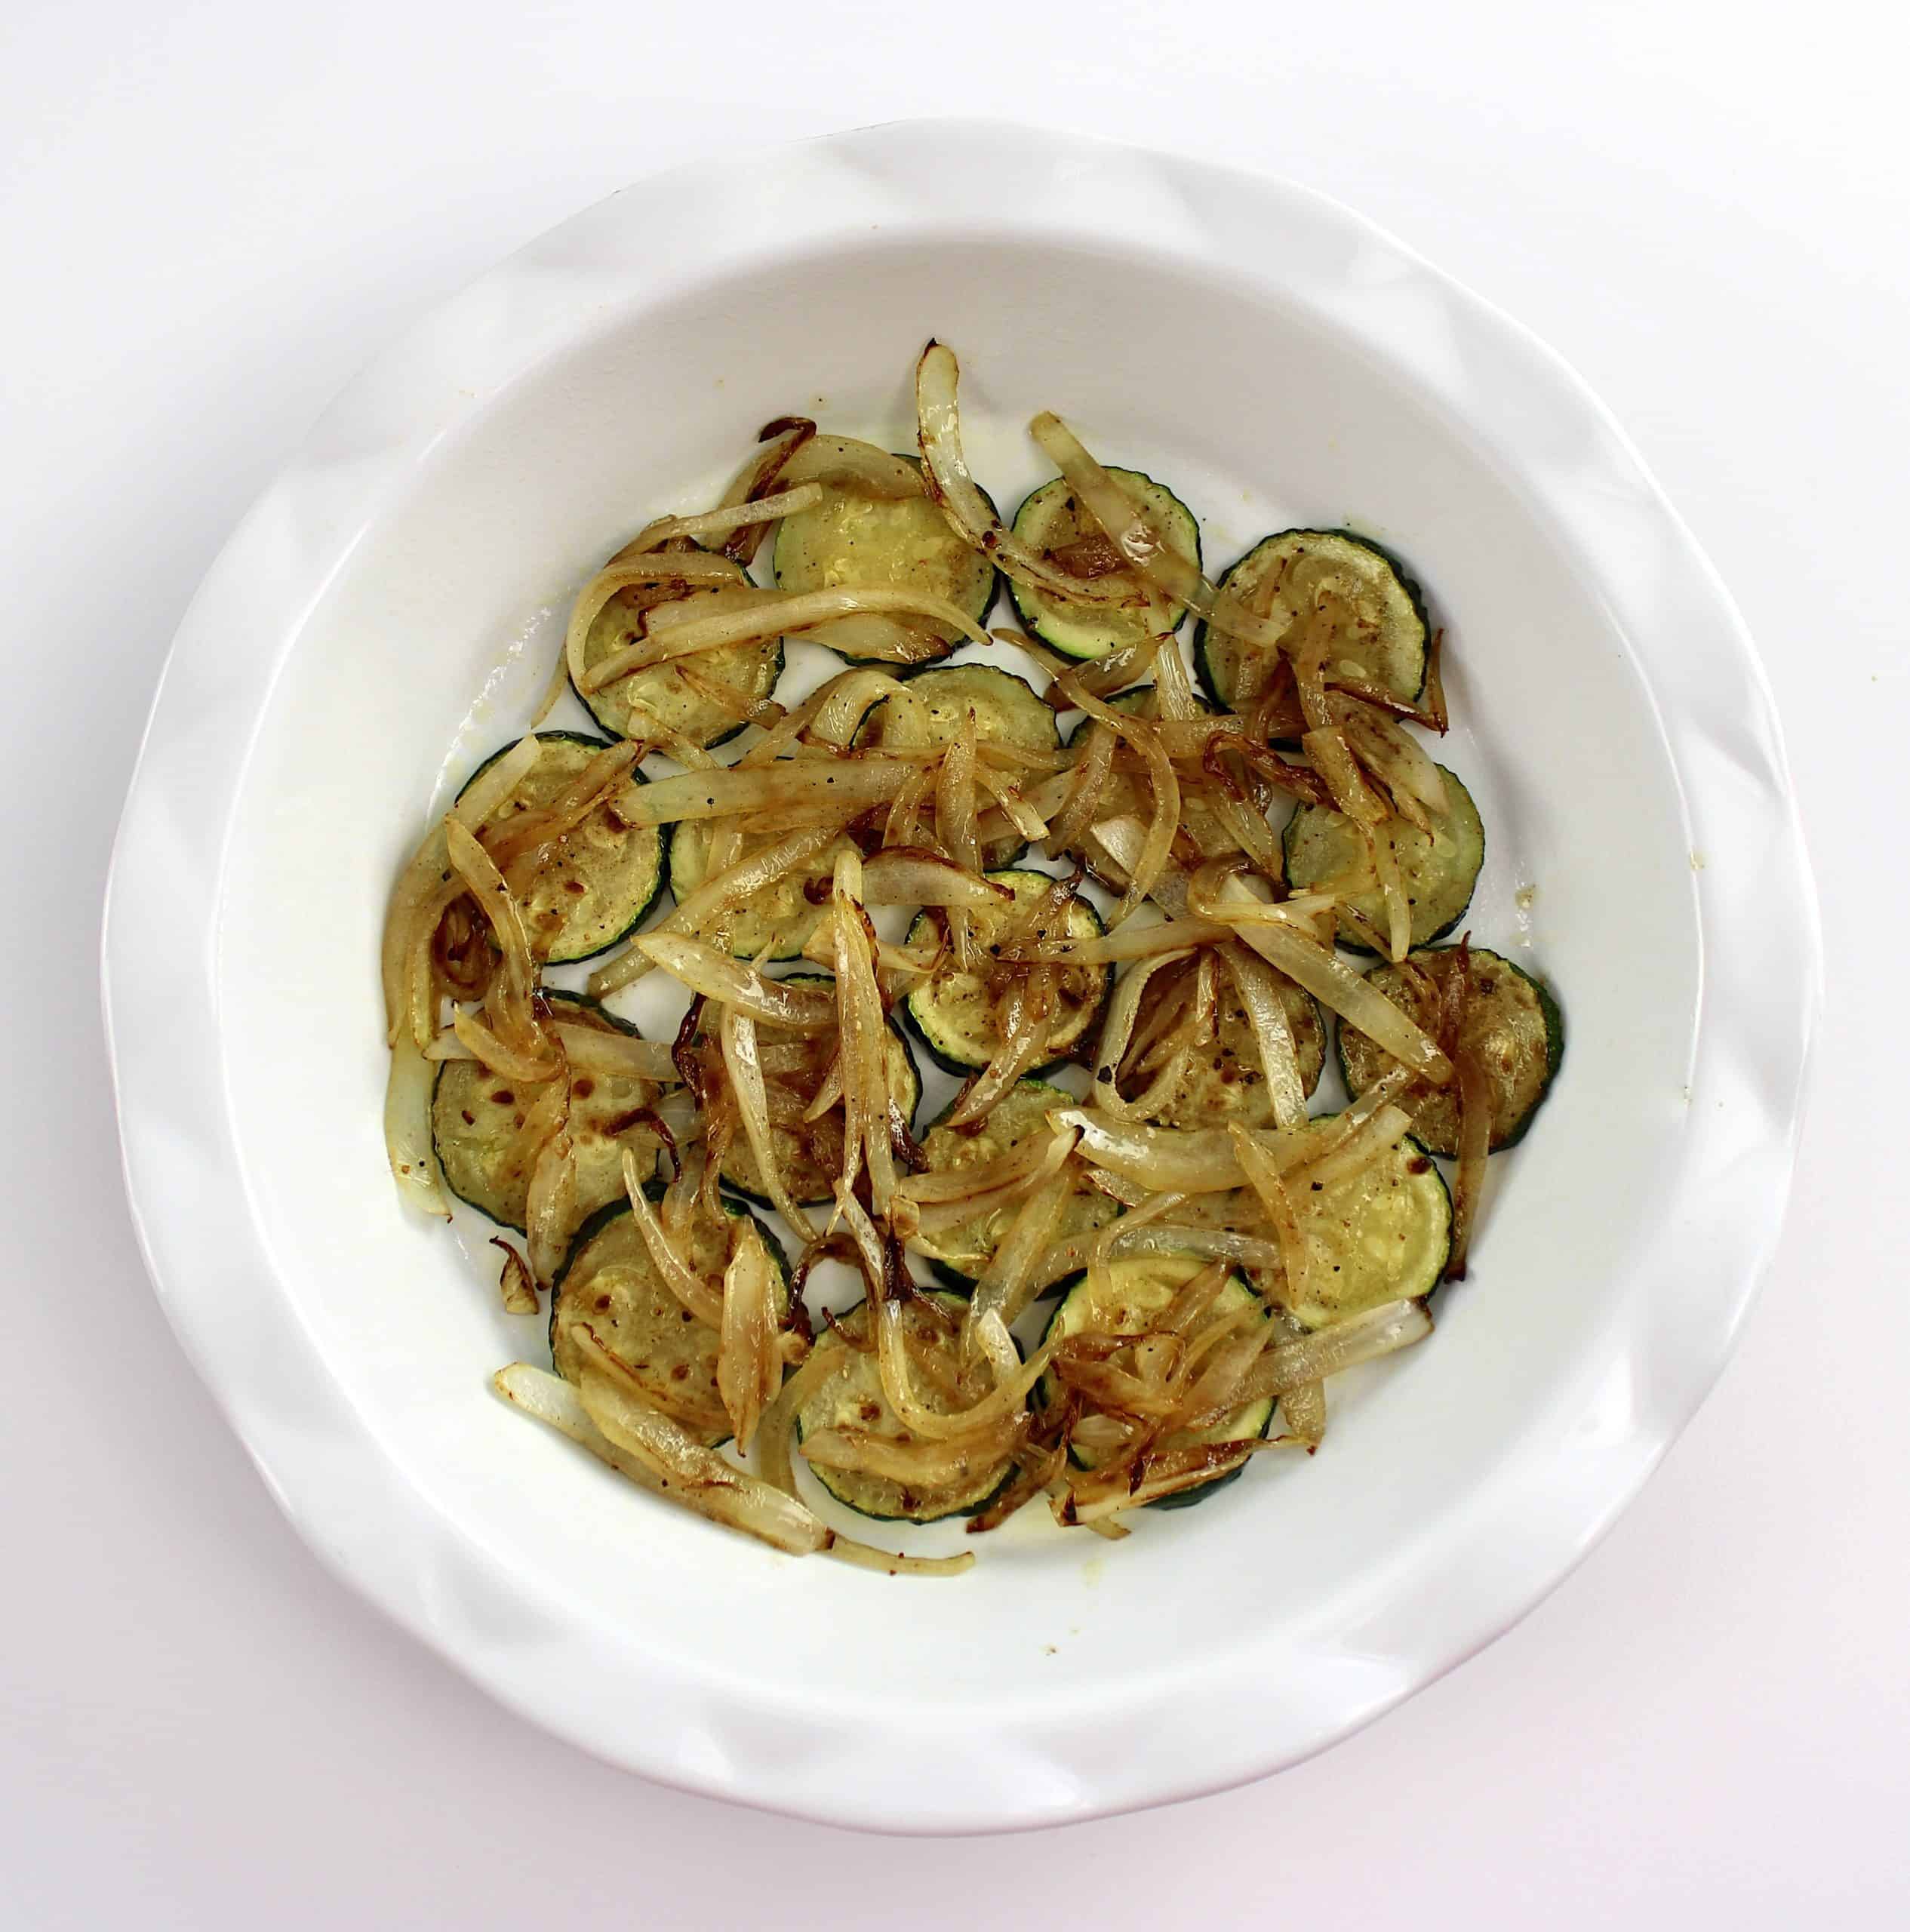 Sauteed zucchini and onions in pie dish